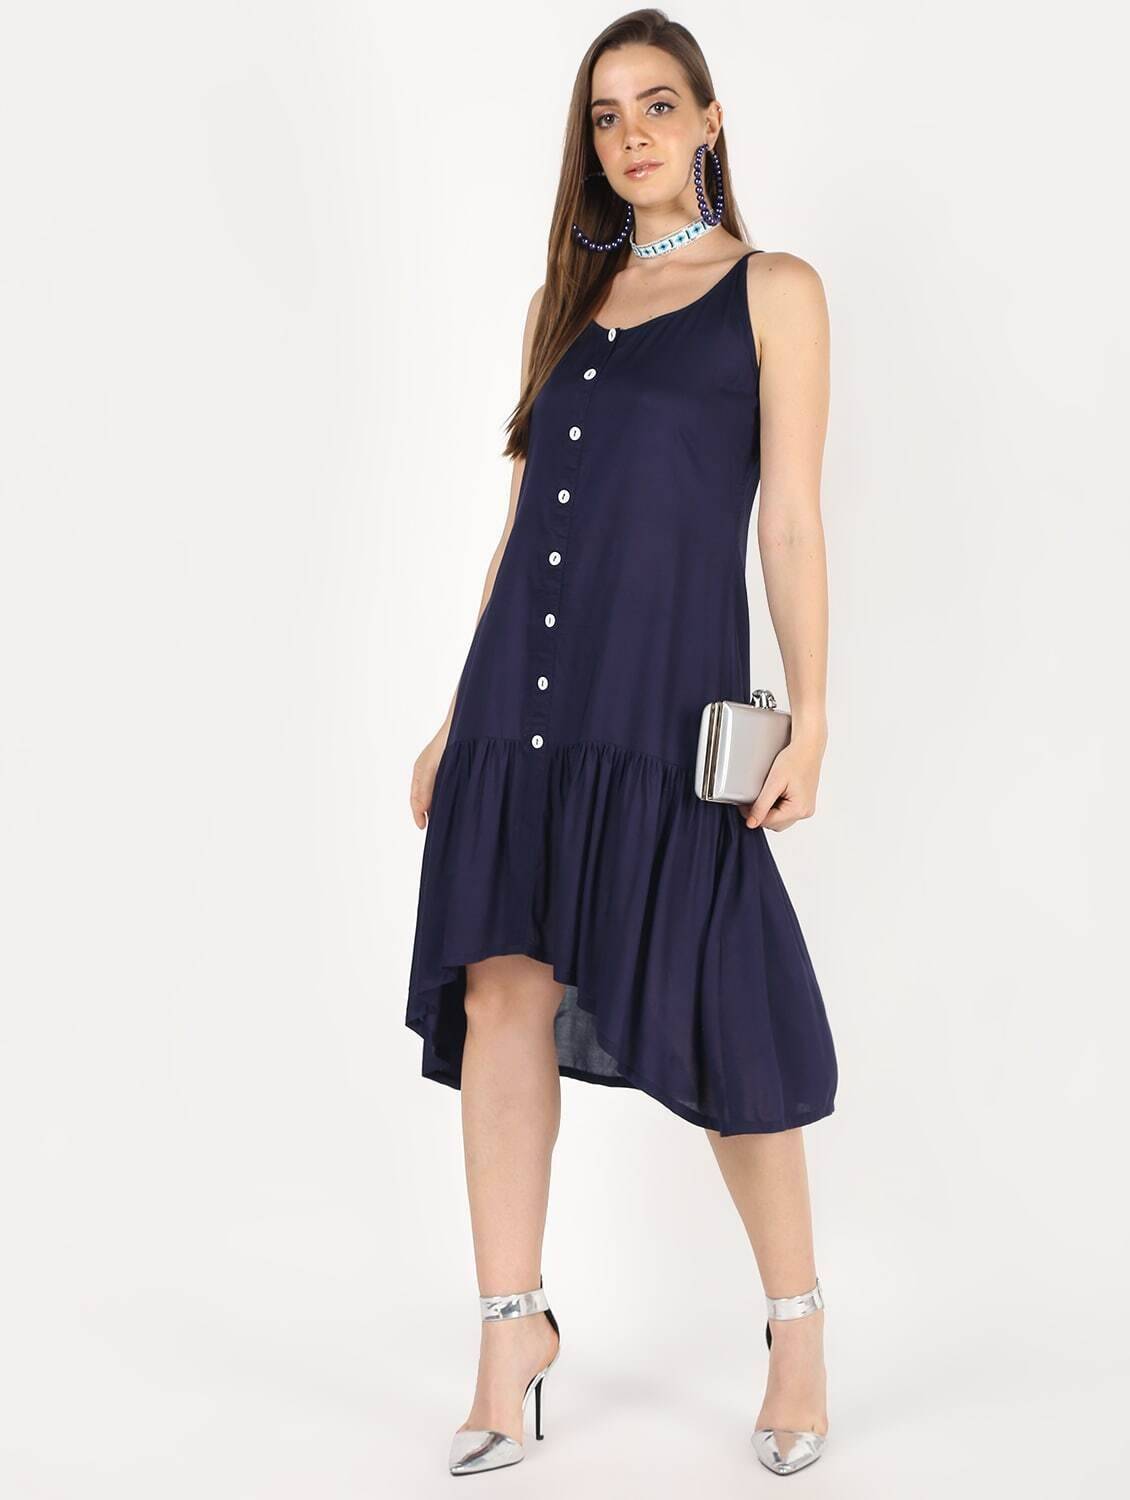 Women's Navy Blue High Low Front Buttoning Dress - Cheera